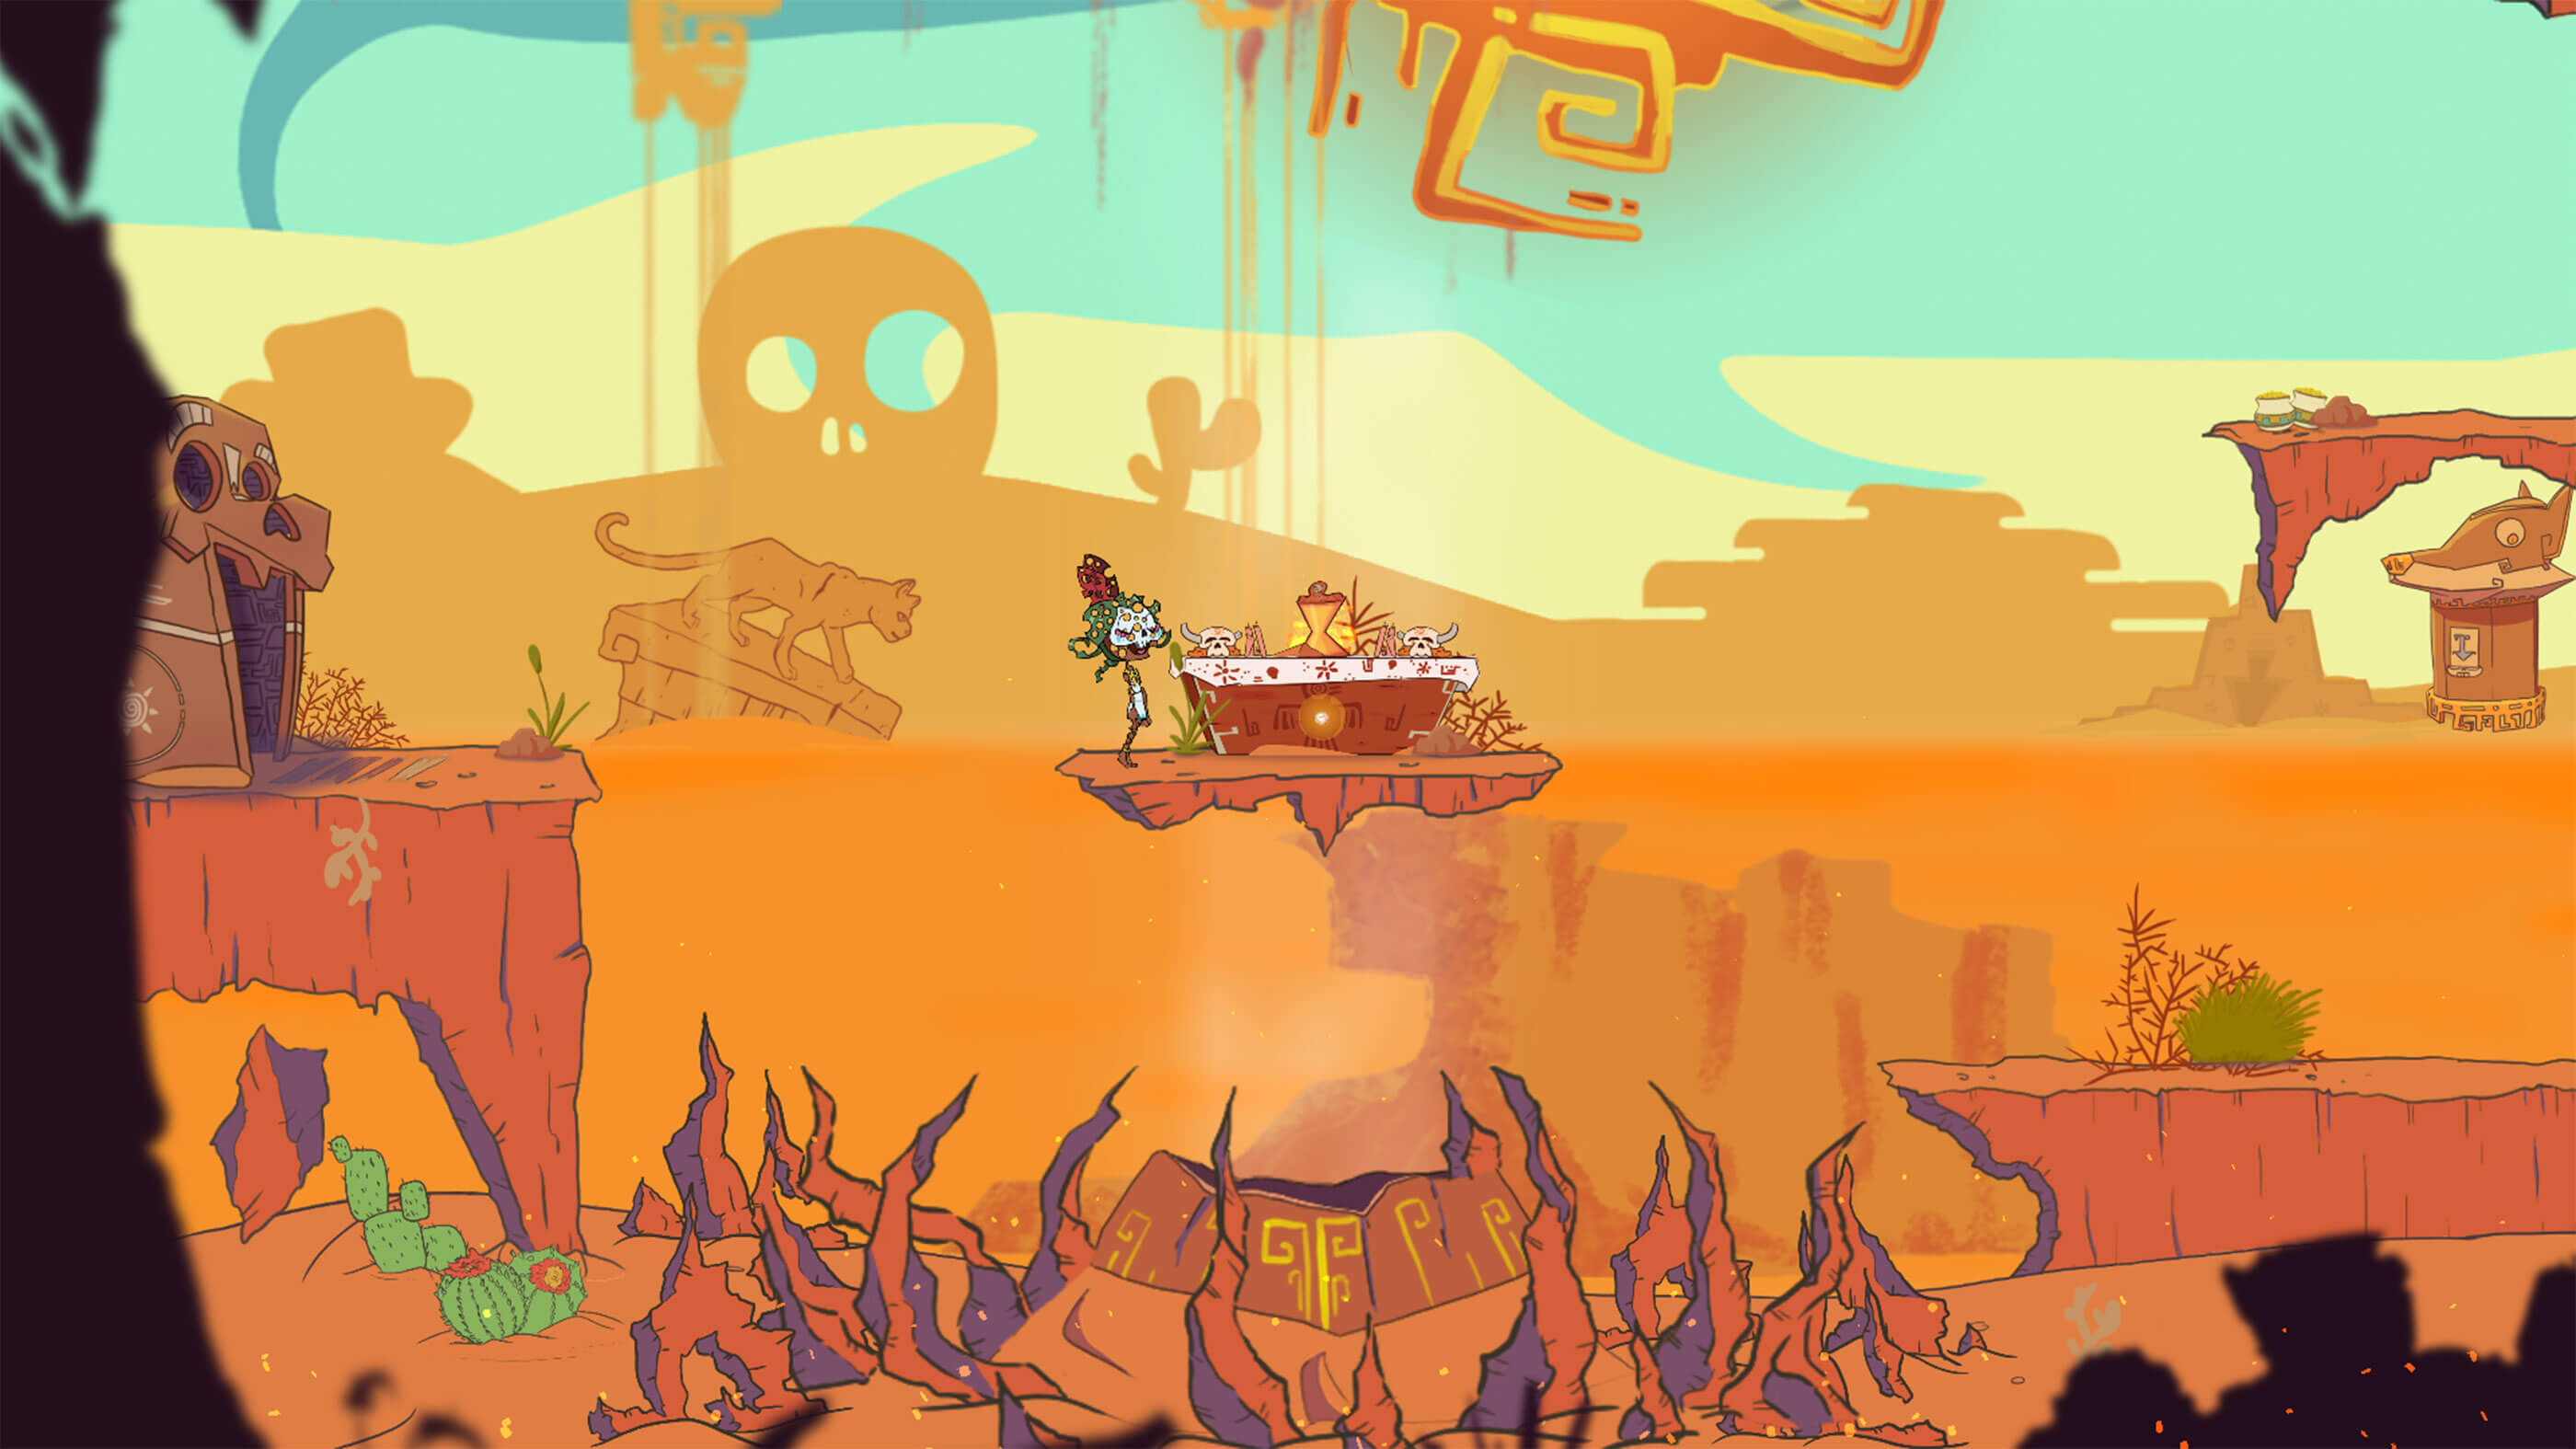 Player stands on a platform above sharp rock spires in a desert